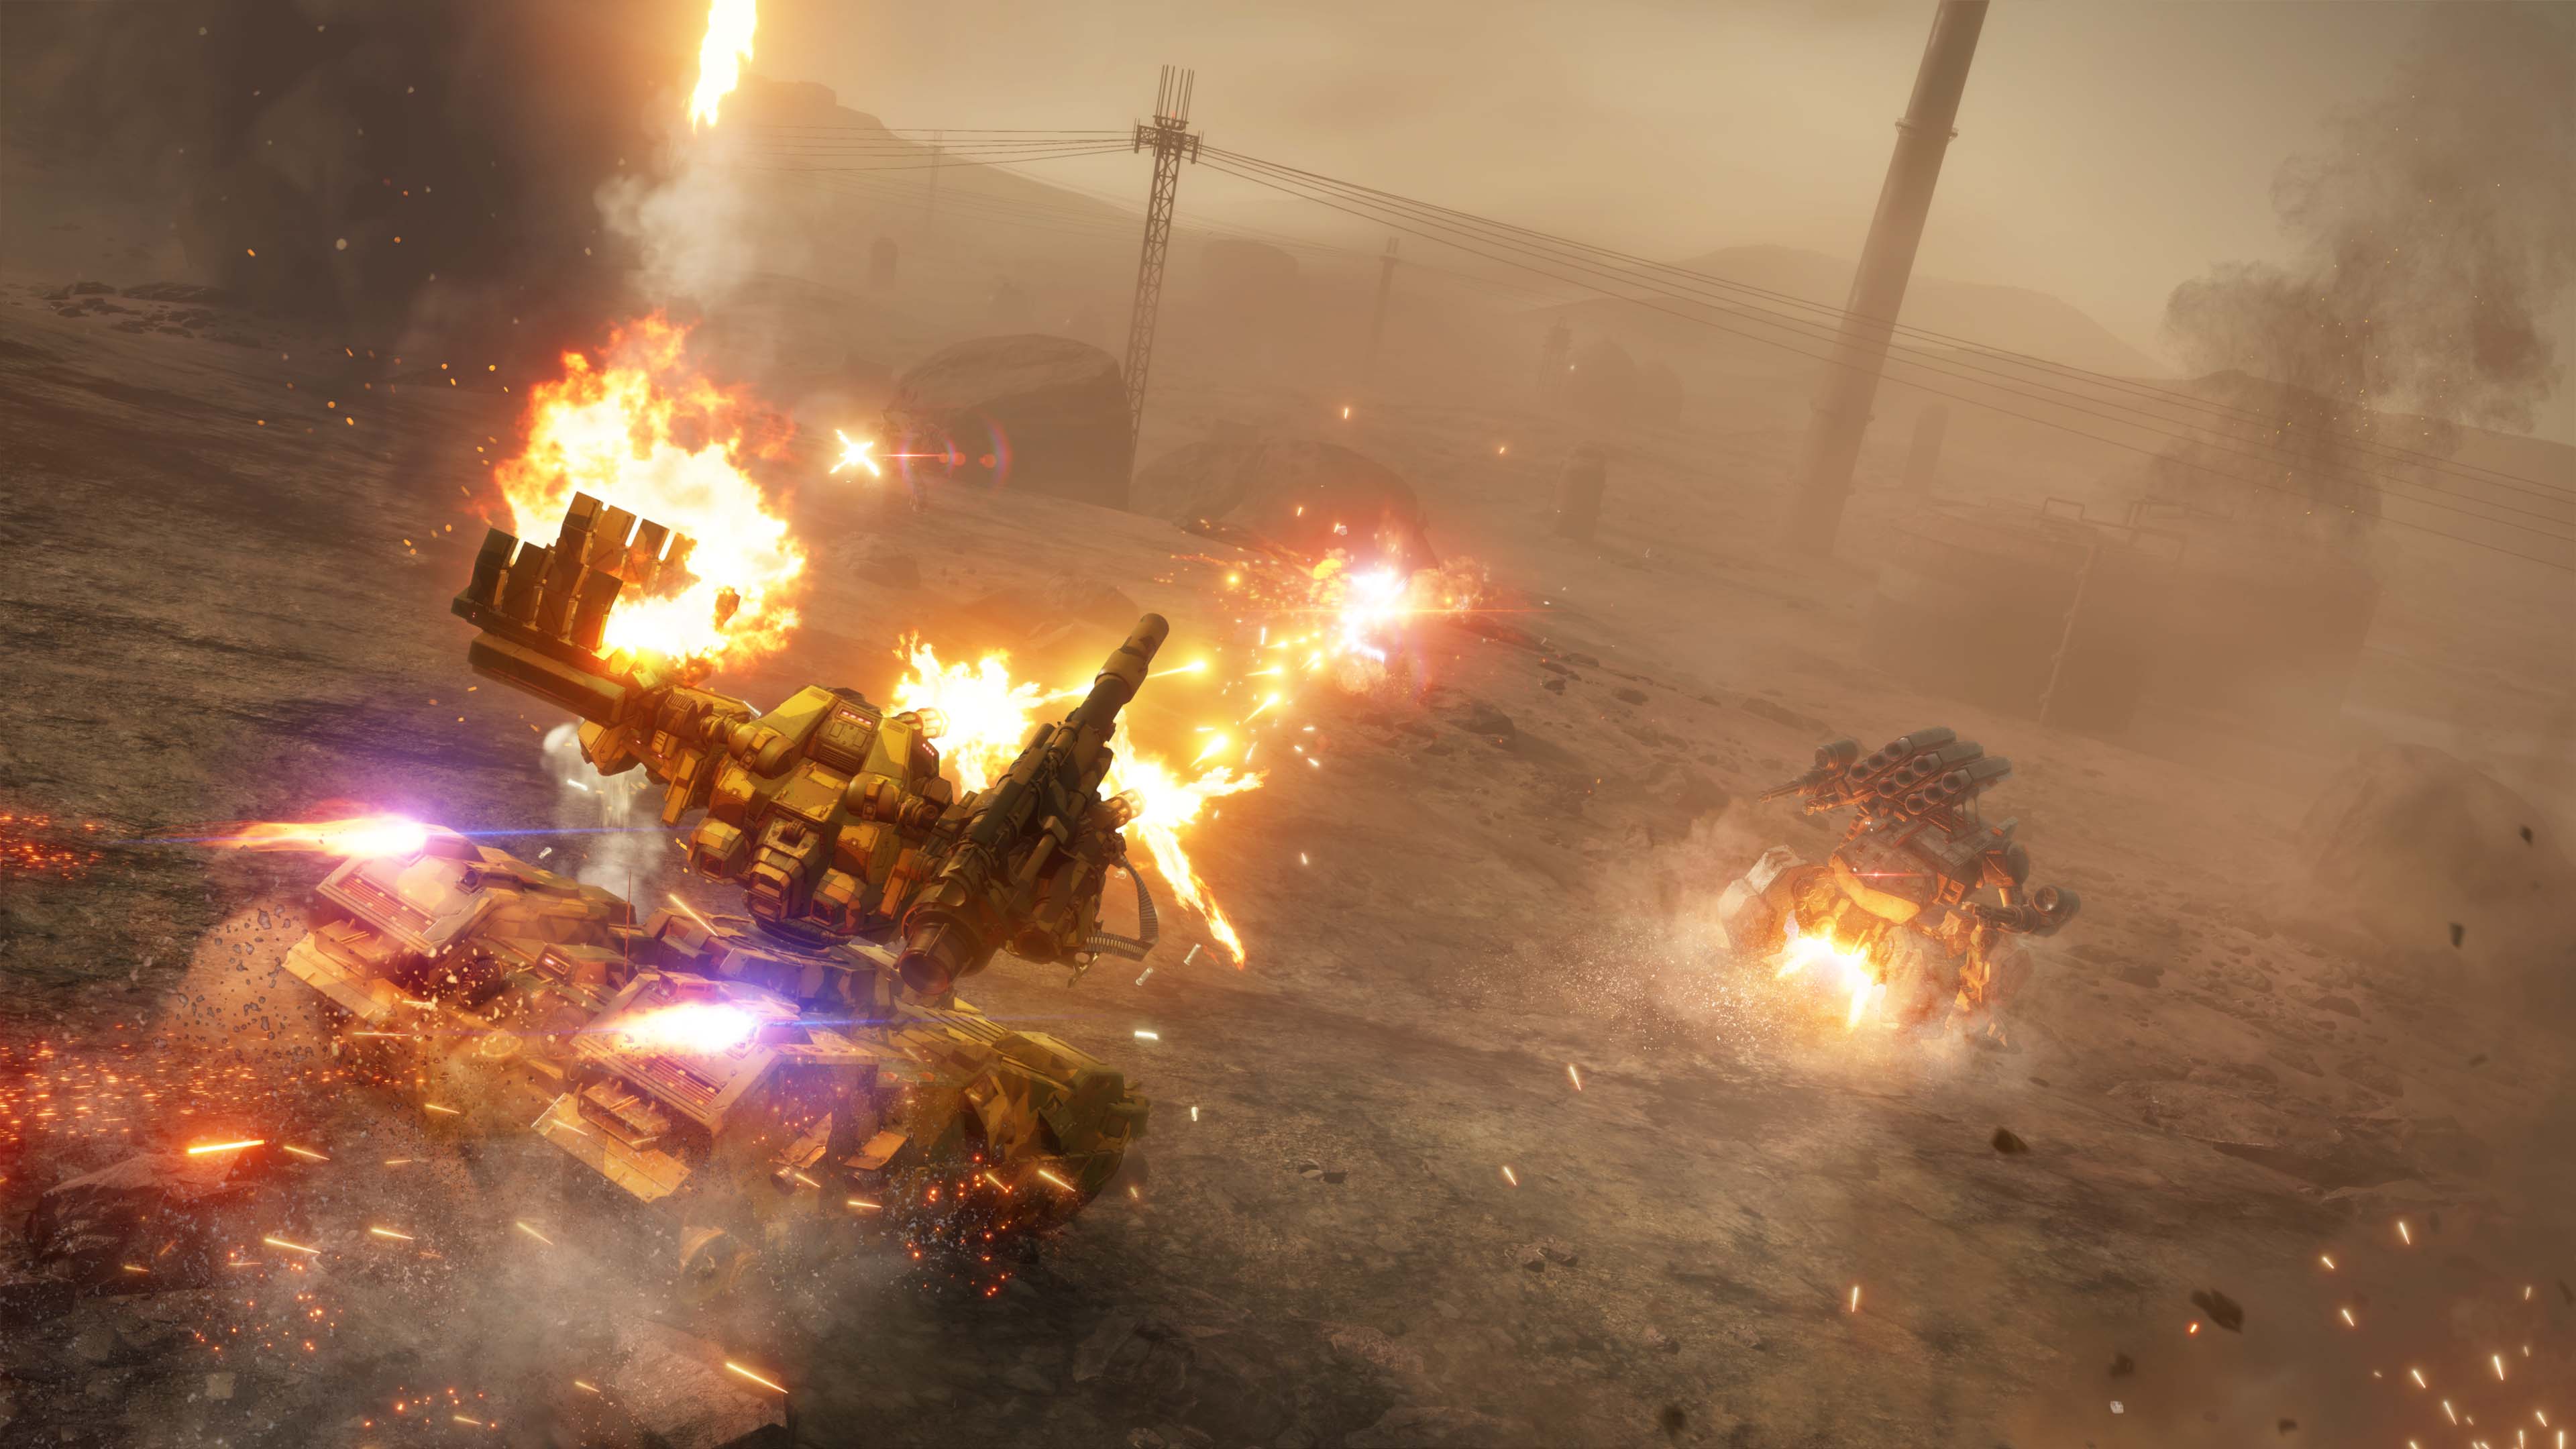 Armored Core VI Fires of Rubicon PS4